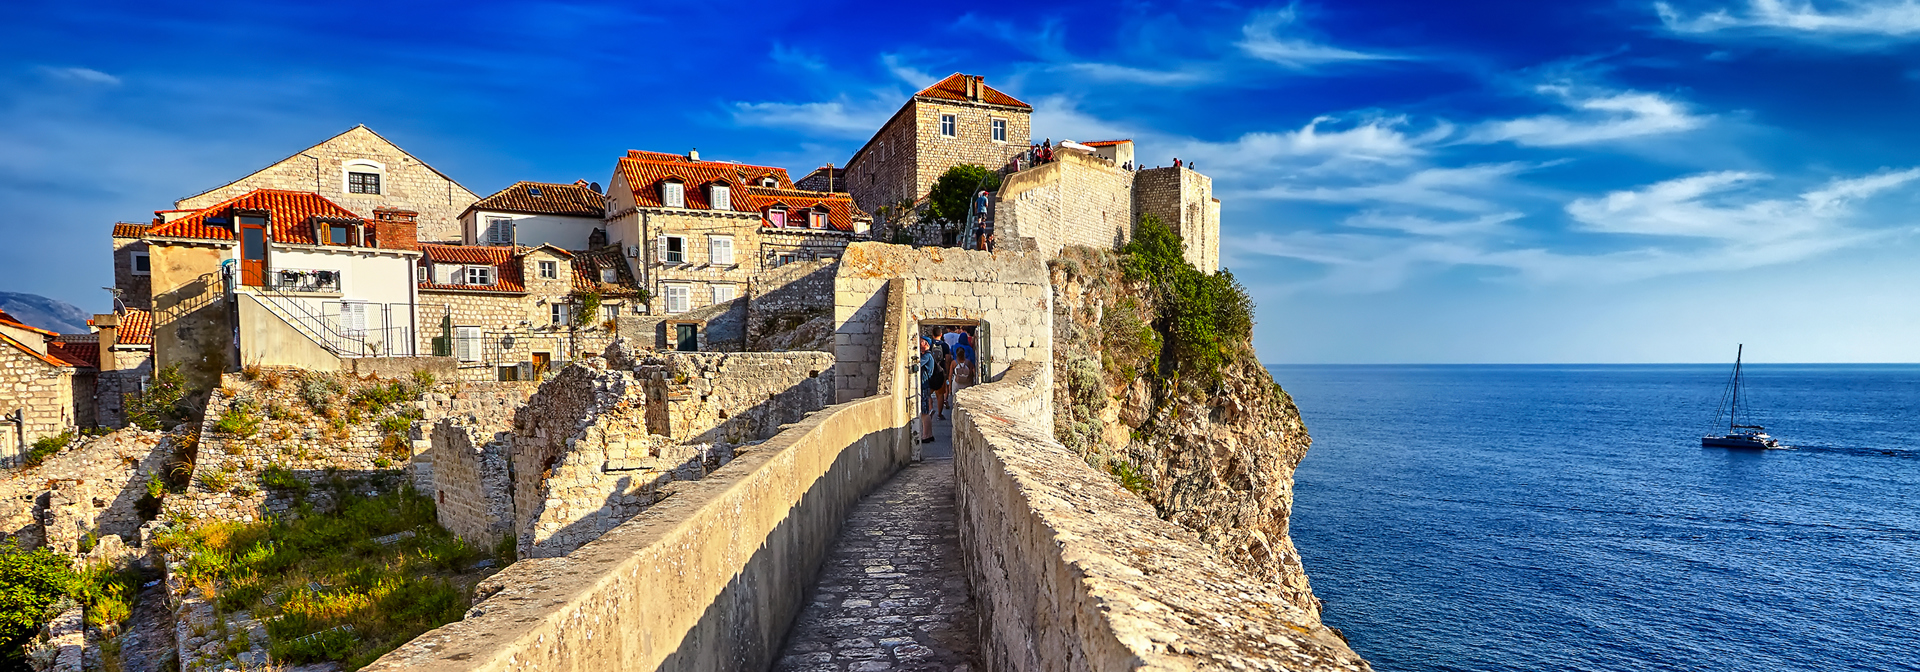 Dubrovnik_8